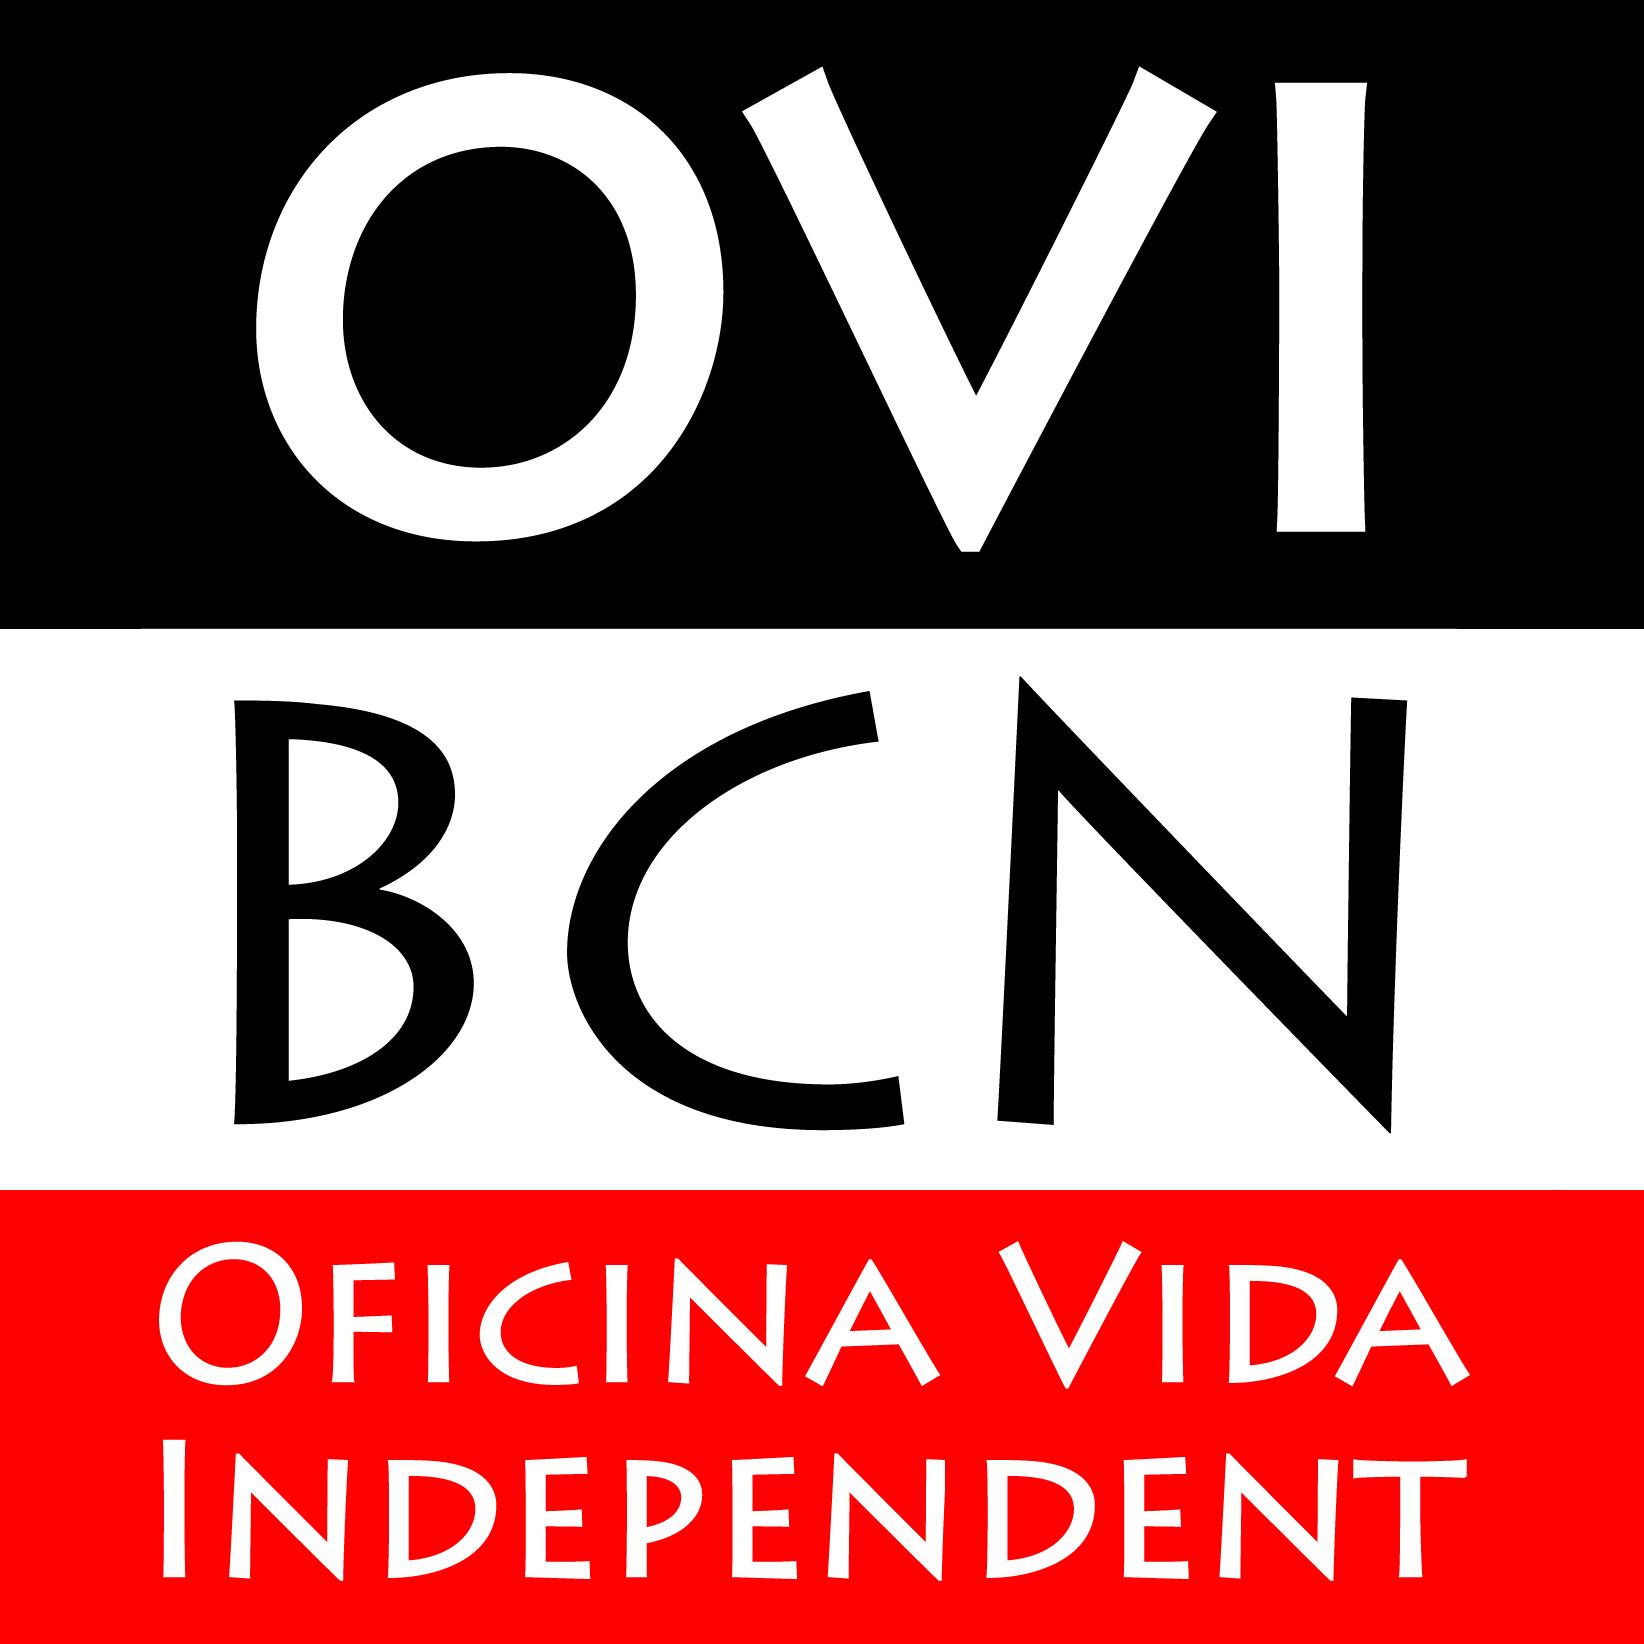 Oficina de Vida Independent (OVI)